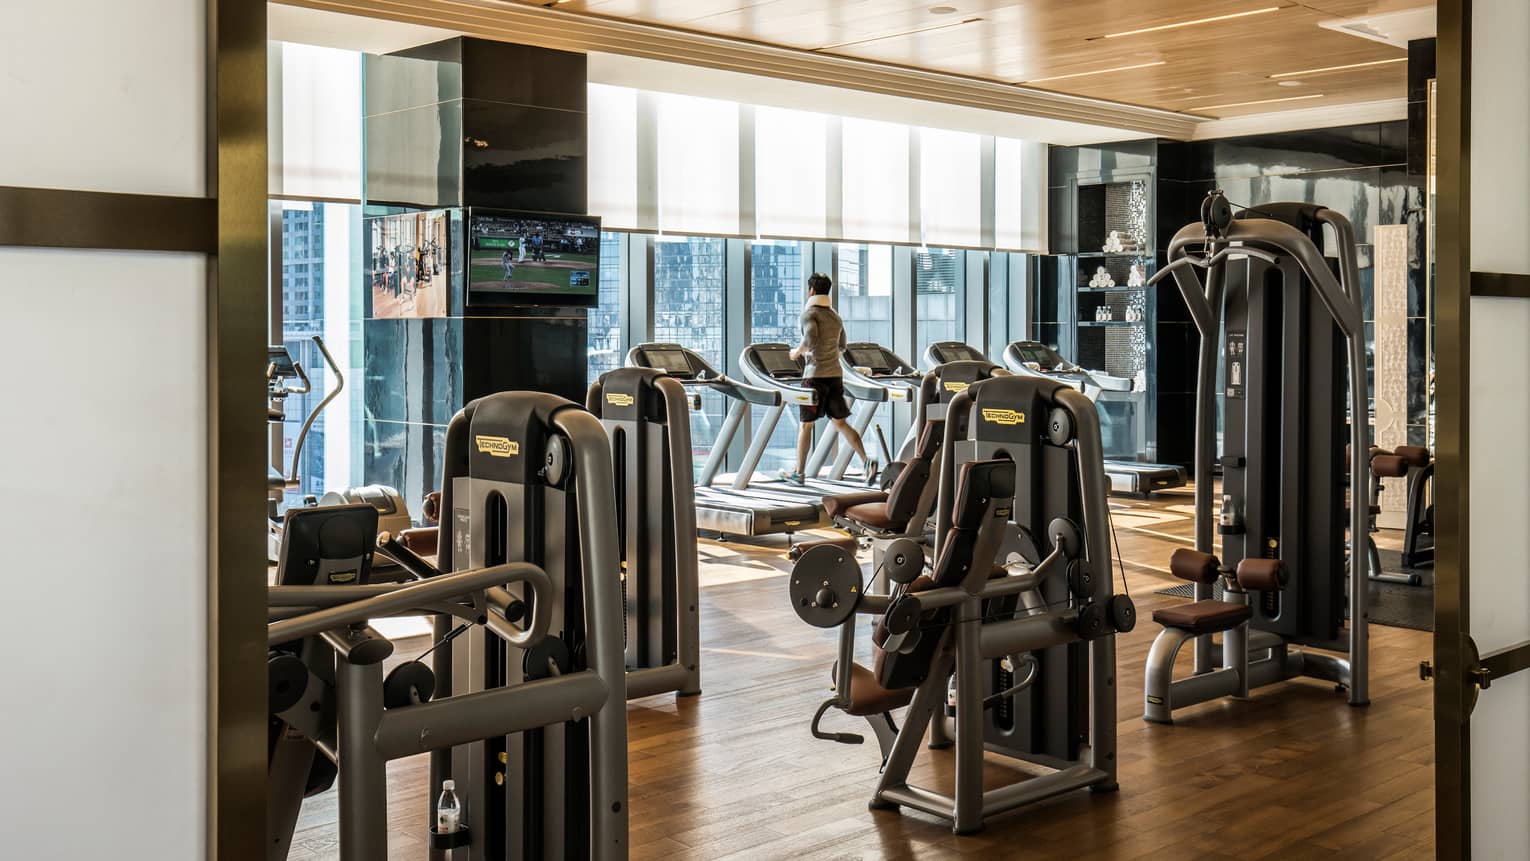 Man runs on treadmill in Fitness Centre by cardio machines, window